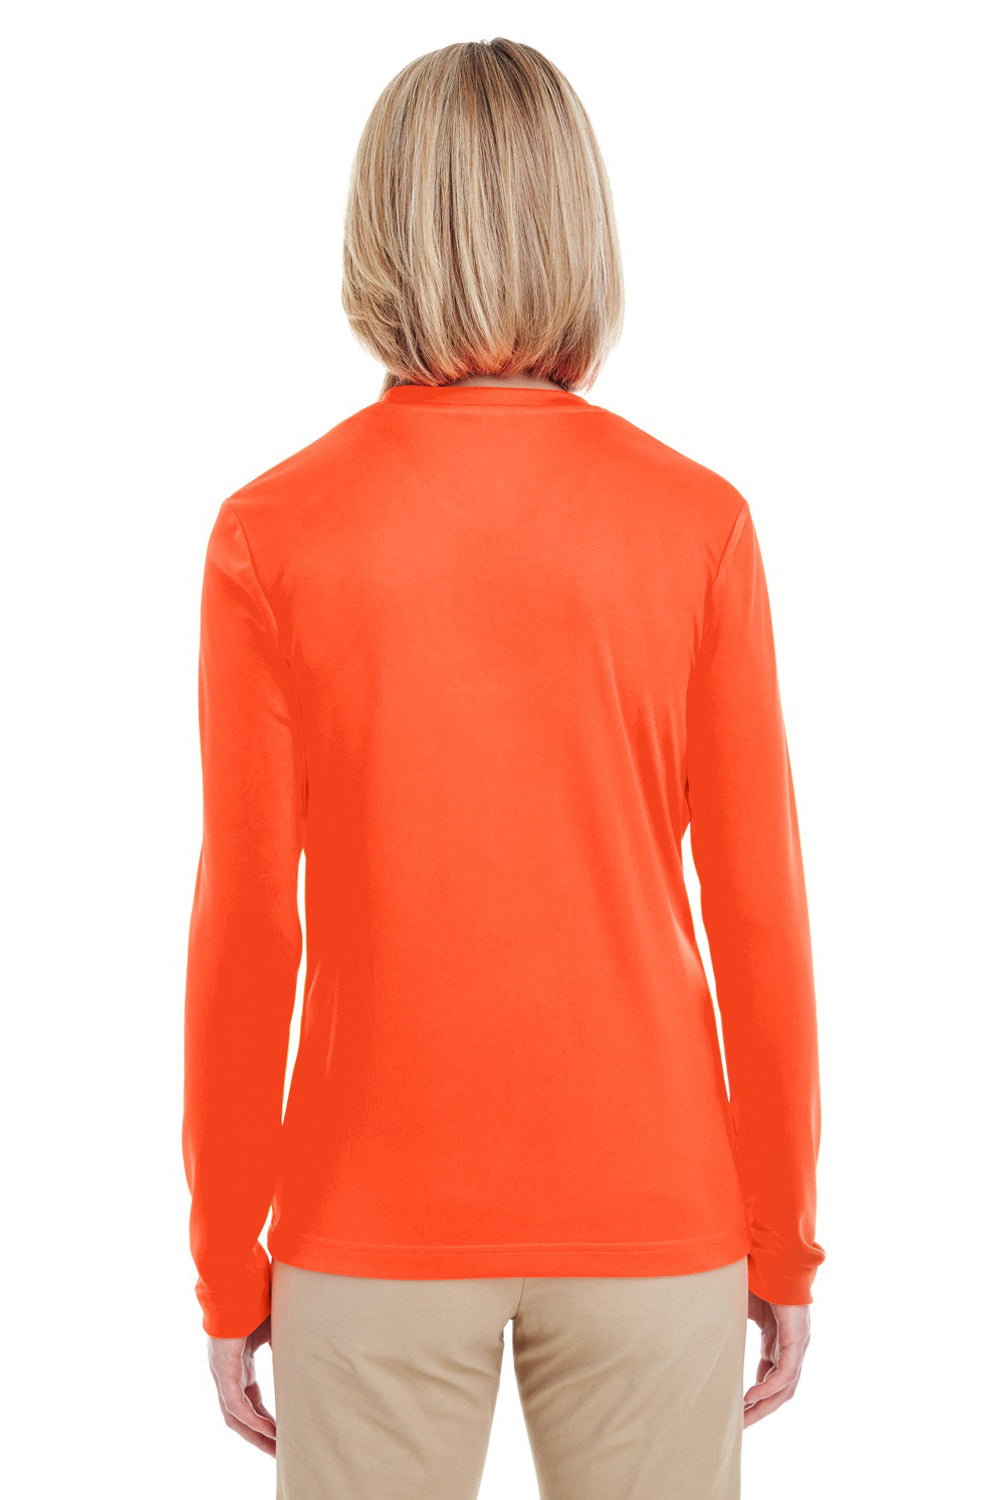 UltraClub 8622W Womens Cool & Dry Performance Moisture Wicking Long Sleeve Crewneck T-Shirt Orange Back